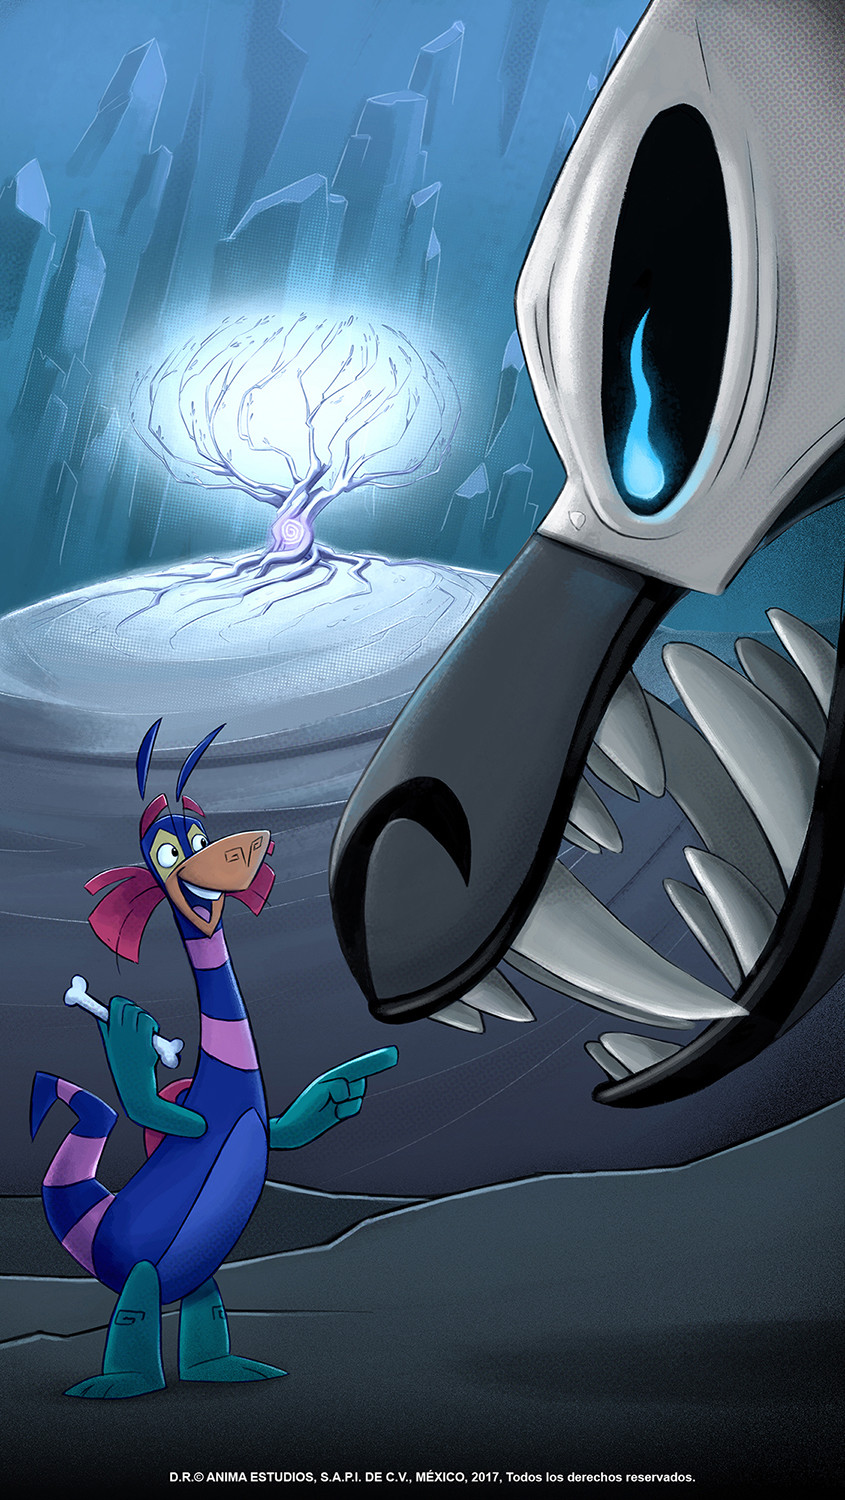 Artwork for the poster of episode 6: Fenrir.